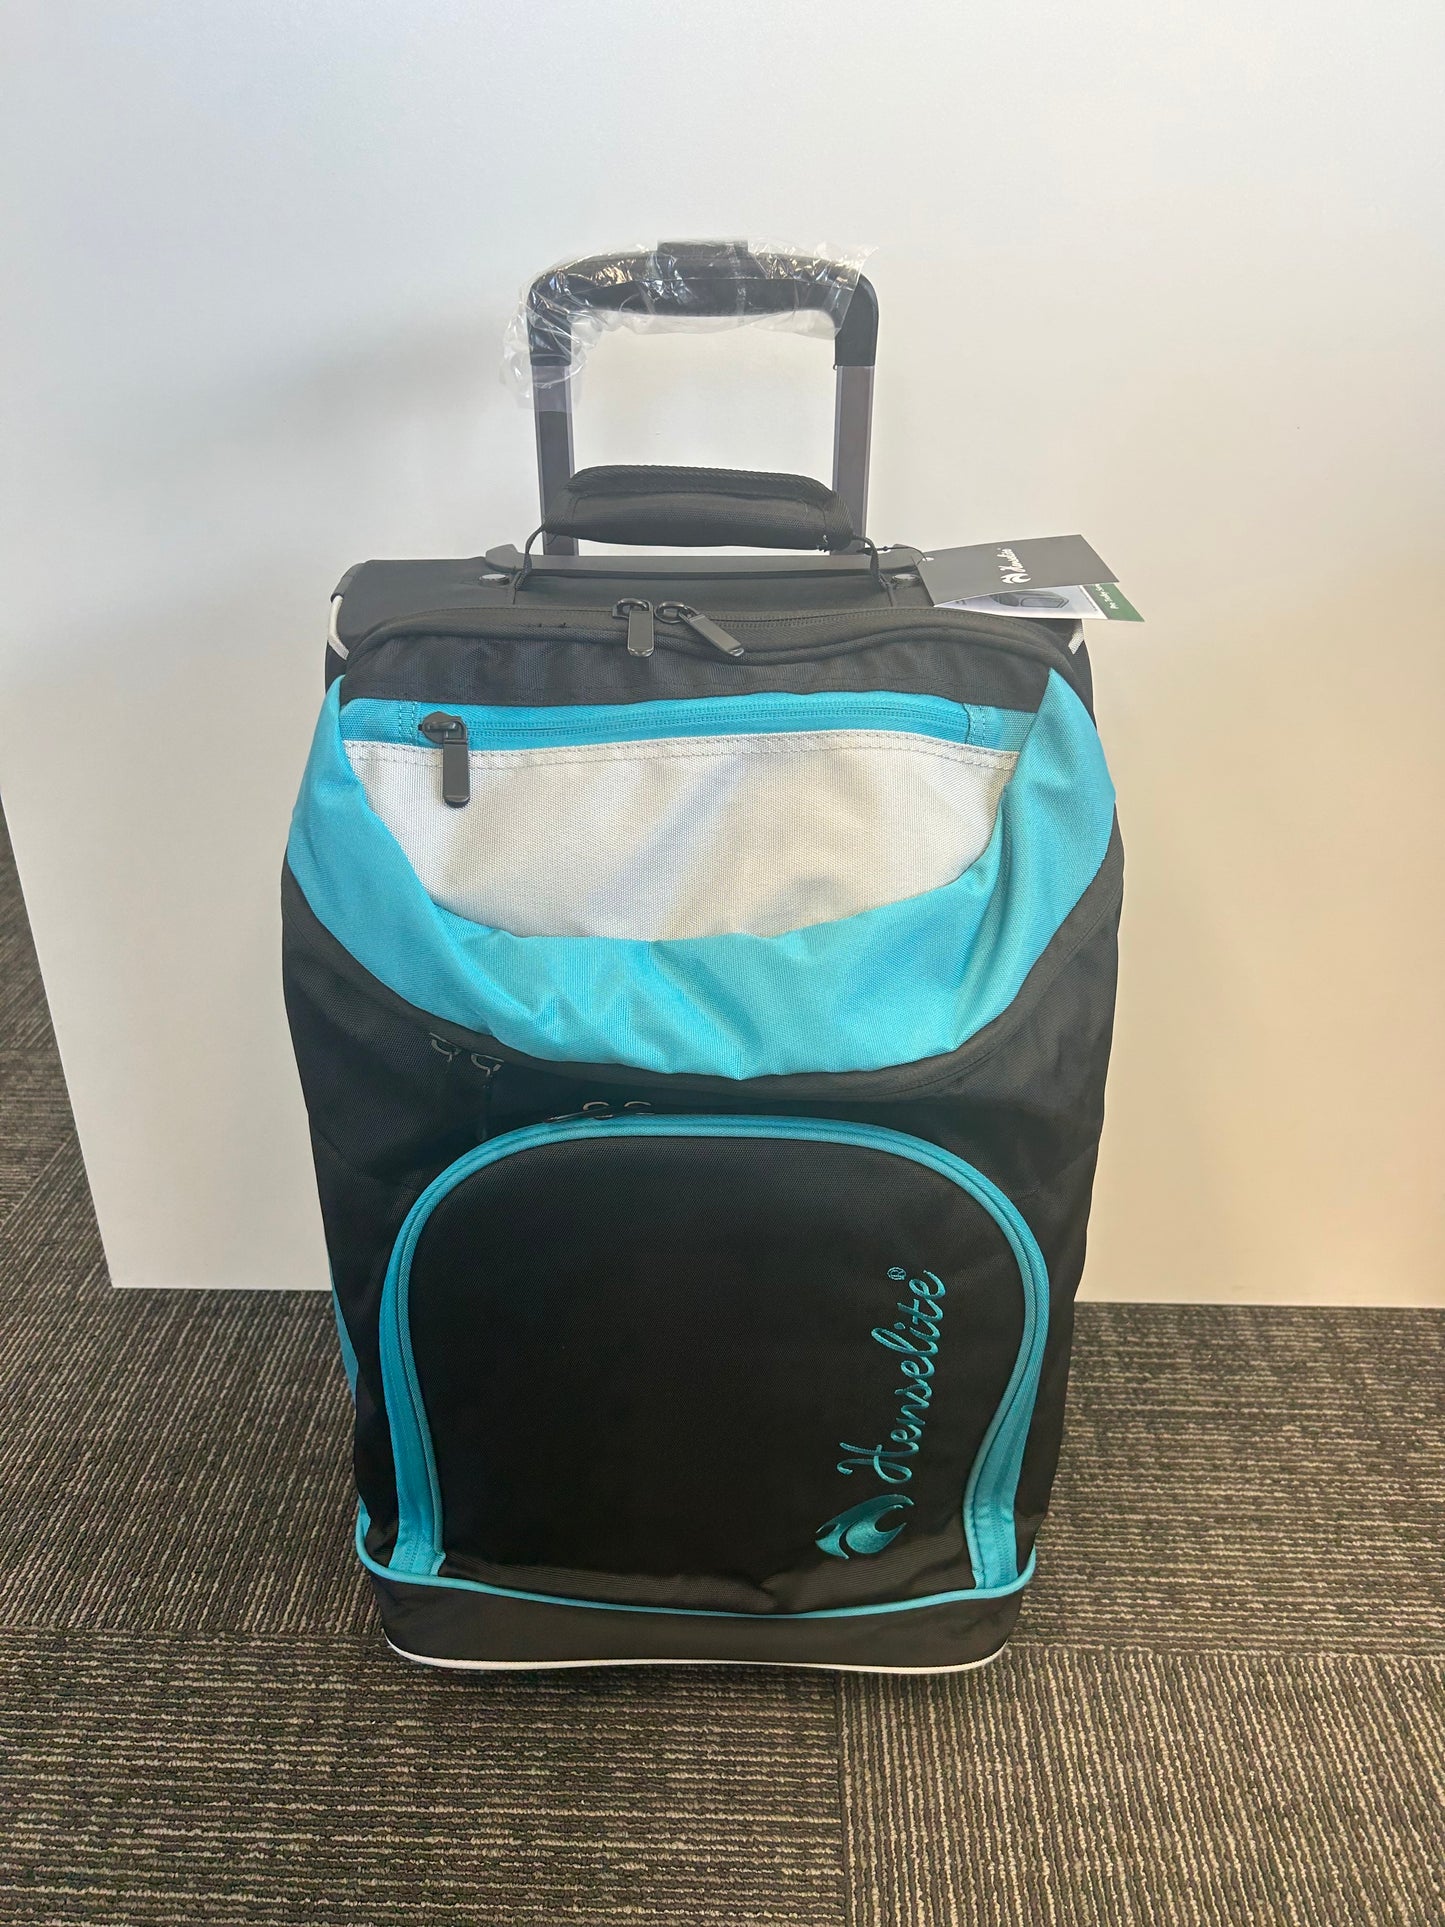 Henselite Pro Series 111 Bag